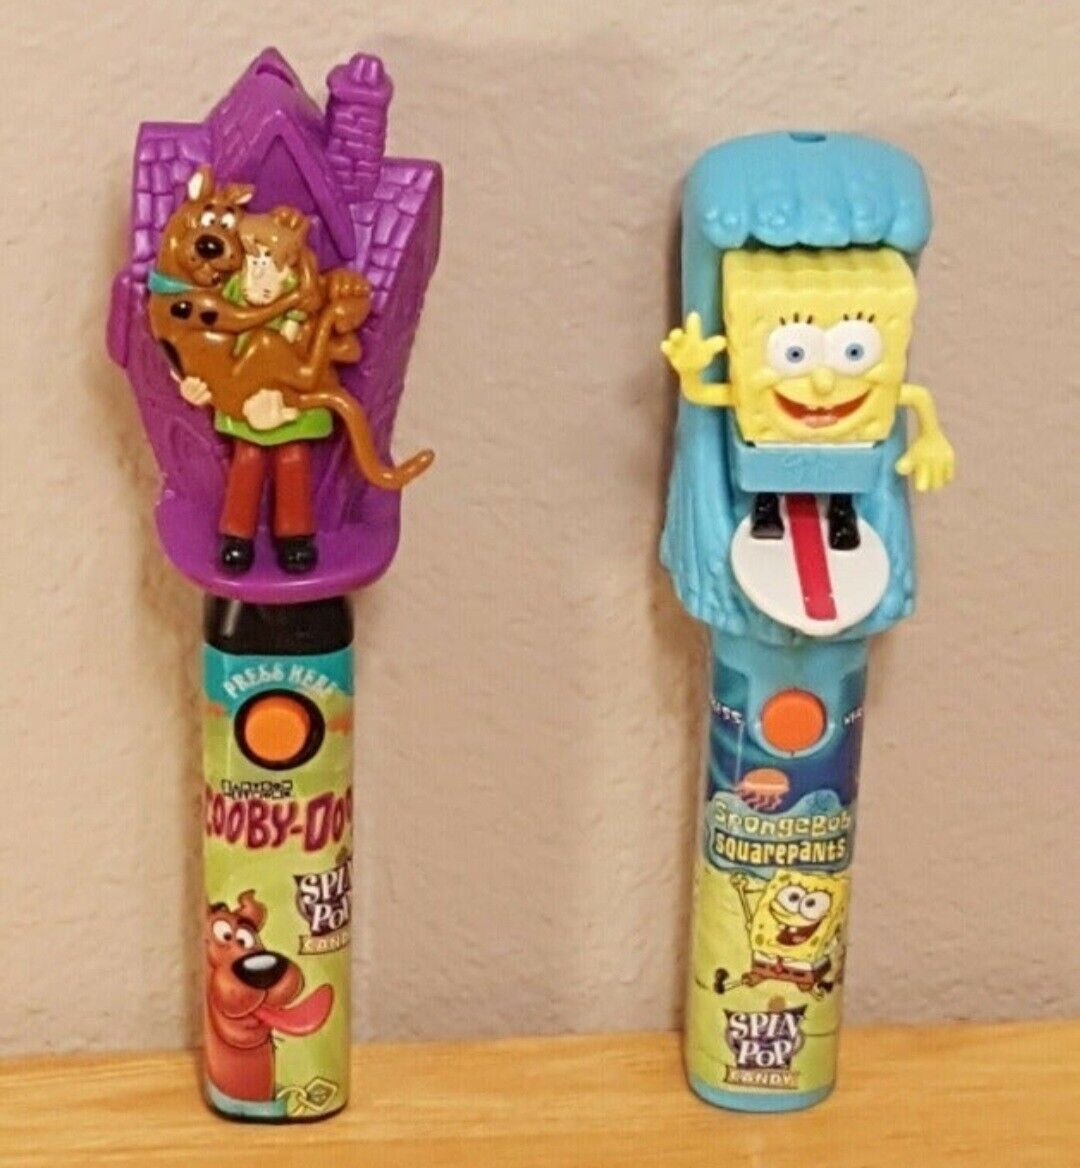 Vintage Spin Pop SpongeBob SquarePants and Scooby-Doo Candy Dispenser Lot of 2.